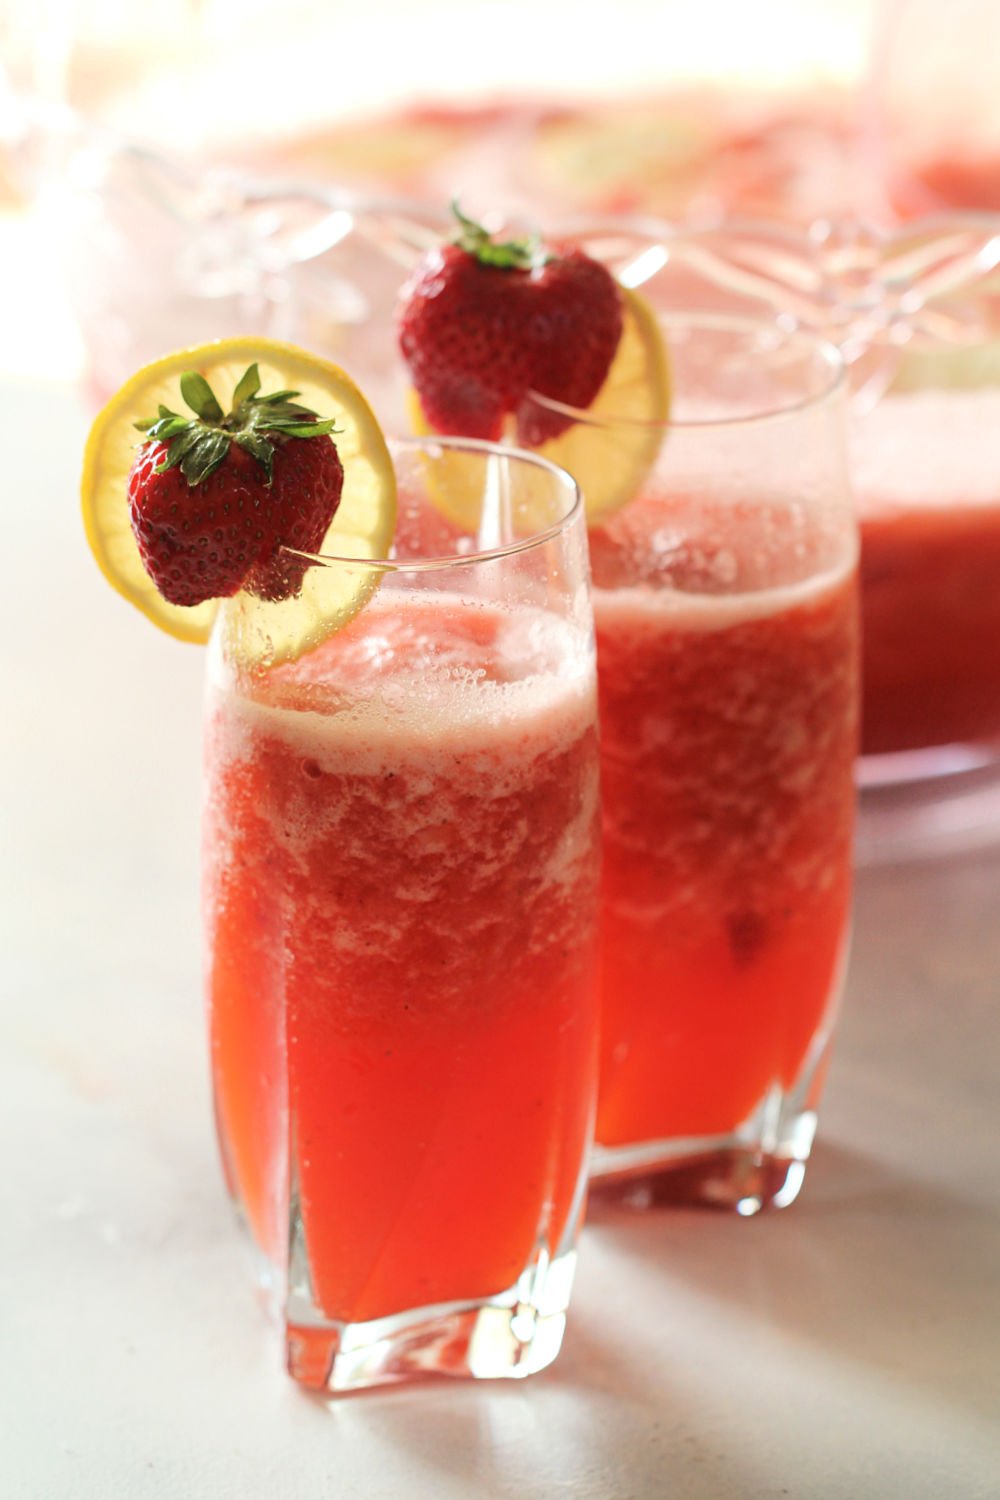 Strawberry Lemonade Slush Drink in glasses with strawberry and lemon garnishes